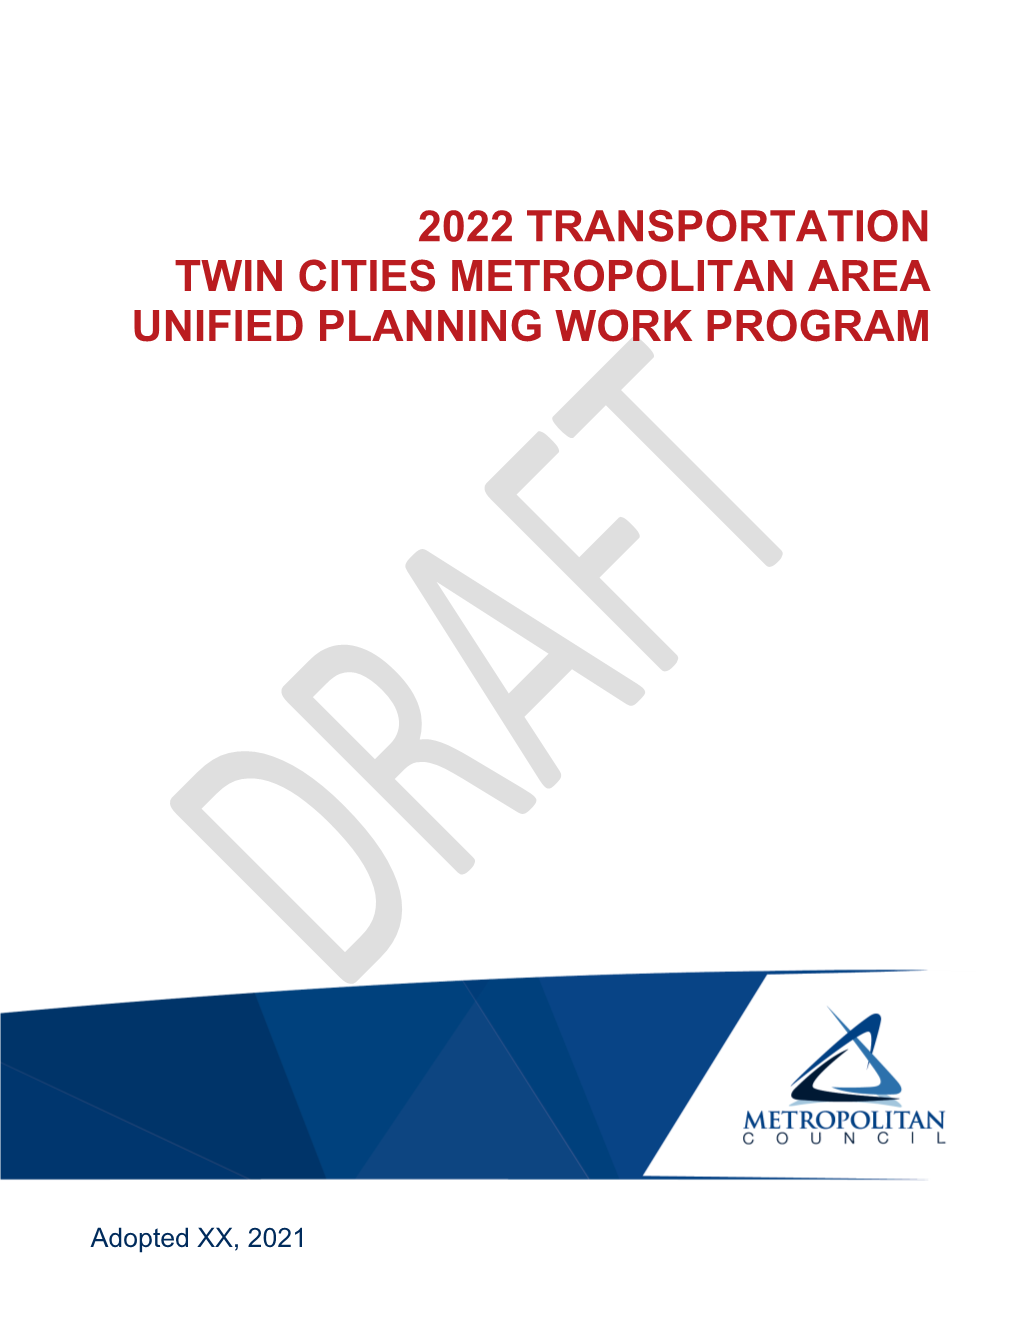 2022 Transportation Twin Cities Metropolitan Area Unified Planning Work Program